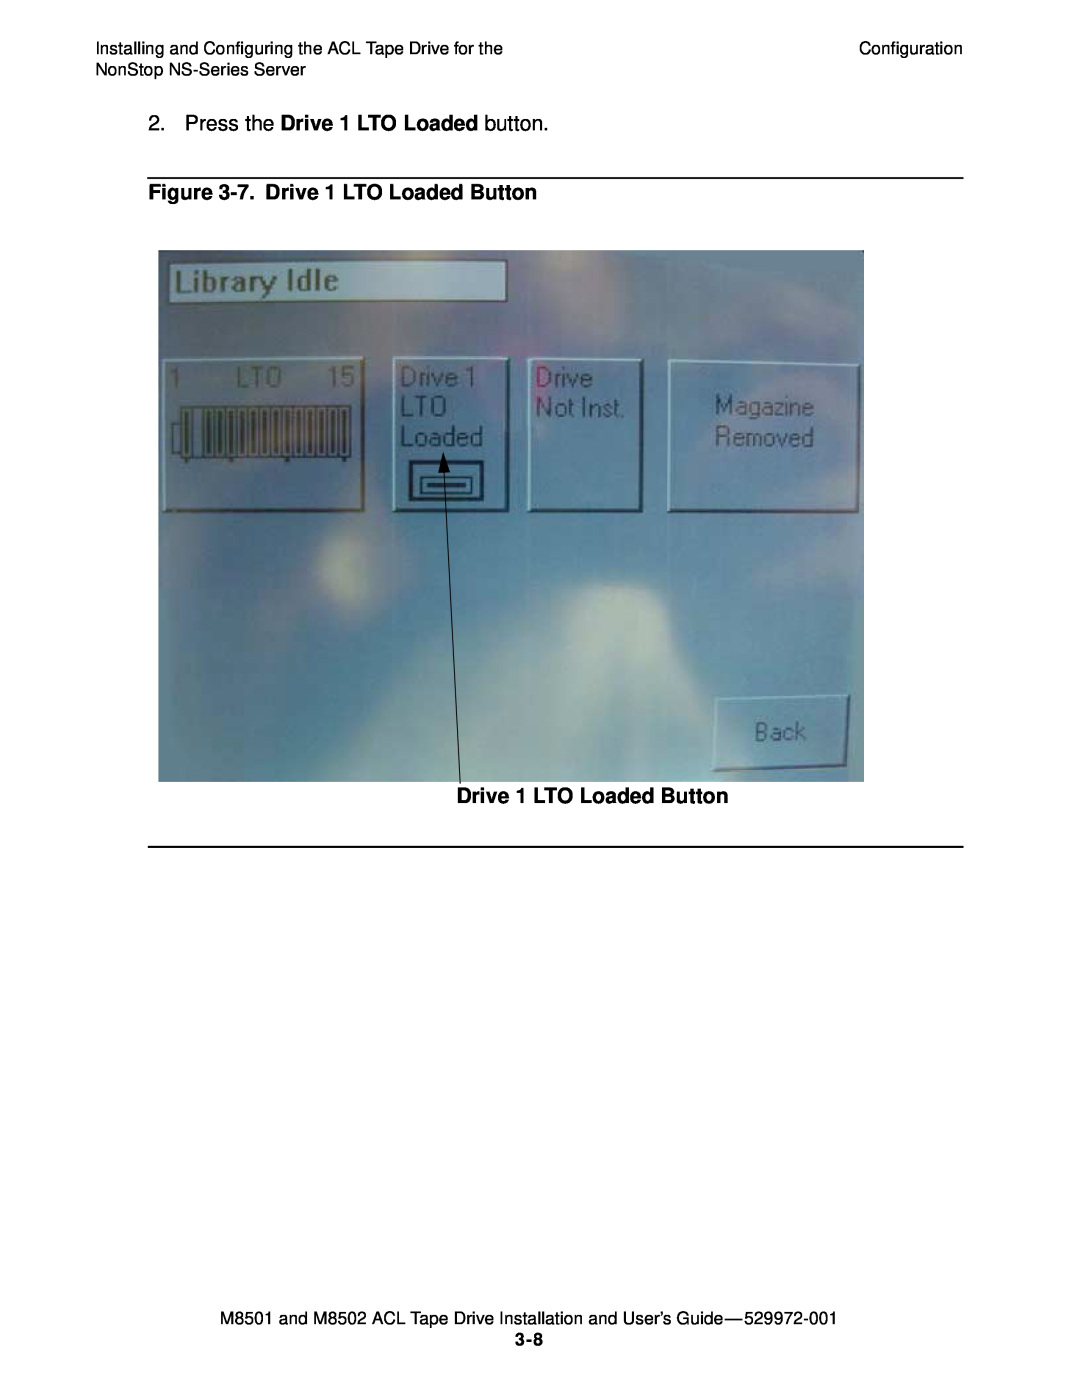 SMC Networks M8501 manual 7. Drive 1 LTO Loaded Button Drive 1 LTO Loaded Button, Configuration, NonStop NS-Series Server 